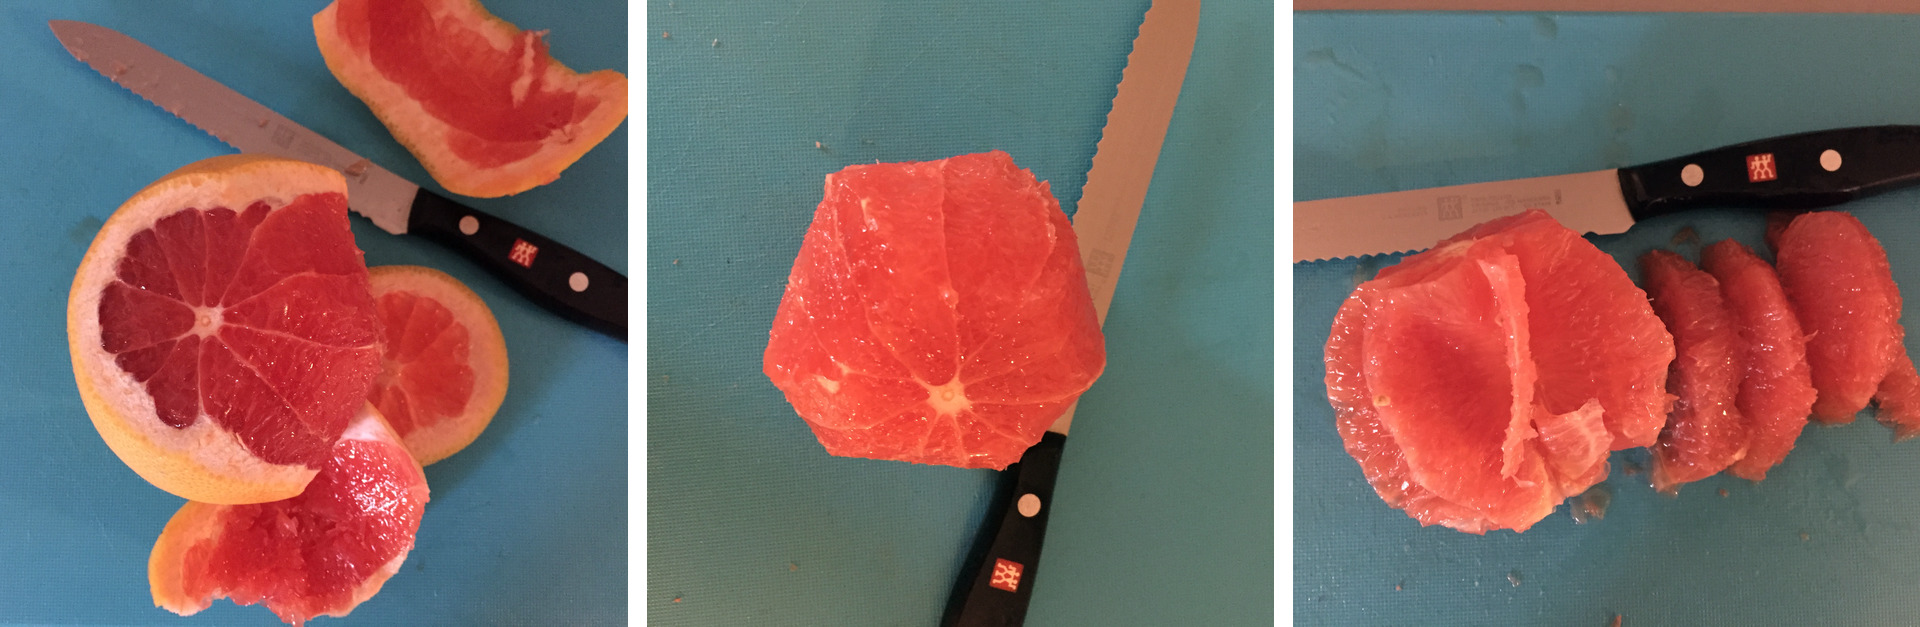 Filleting grapefruit